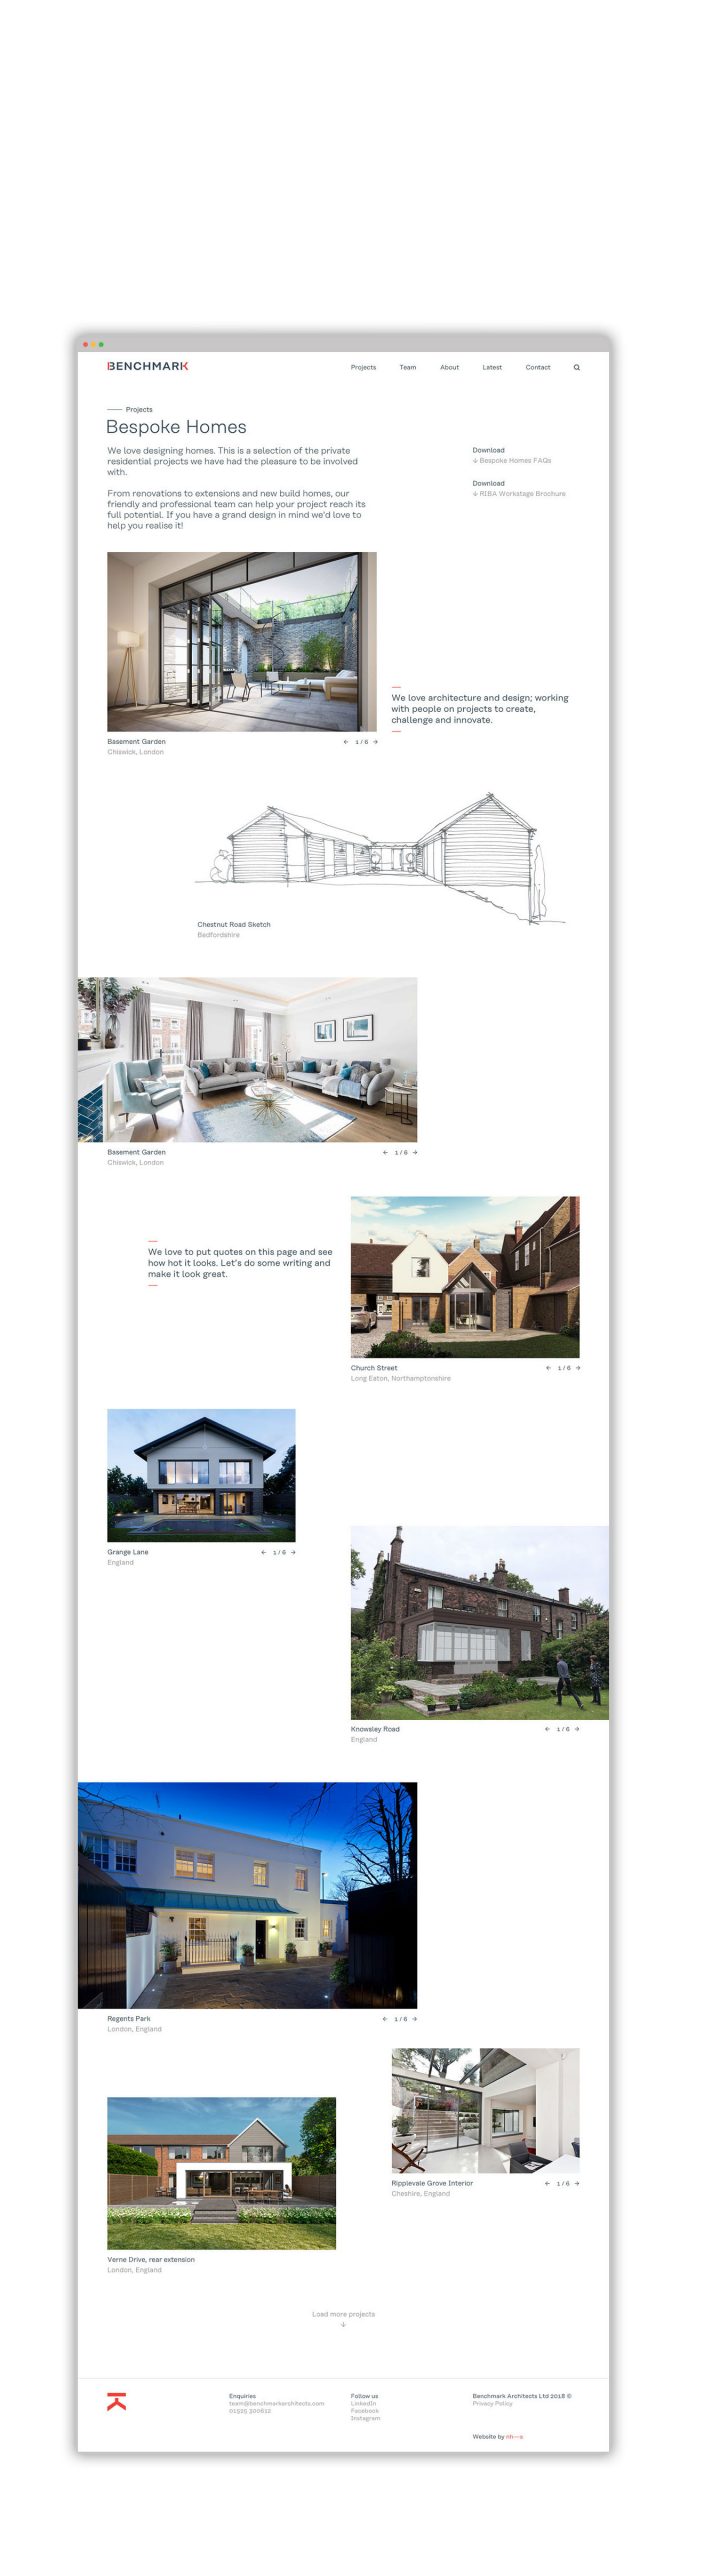 benchmark architects website design by Leeds based Freelance Designer Neil Holroyd